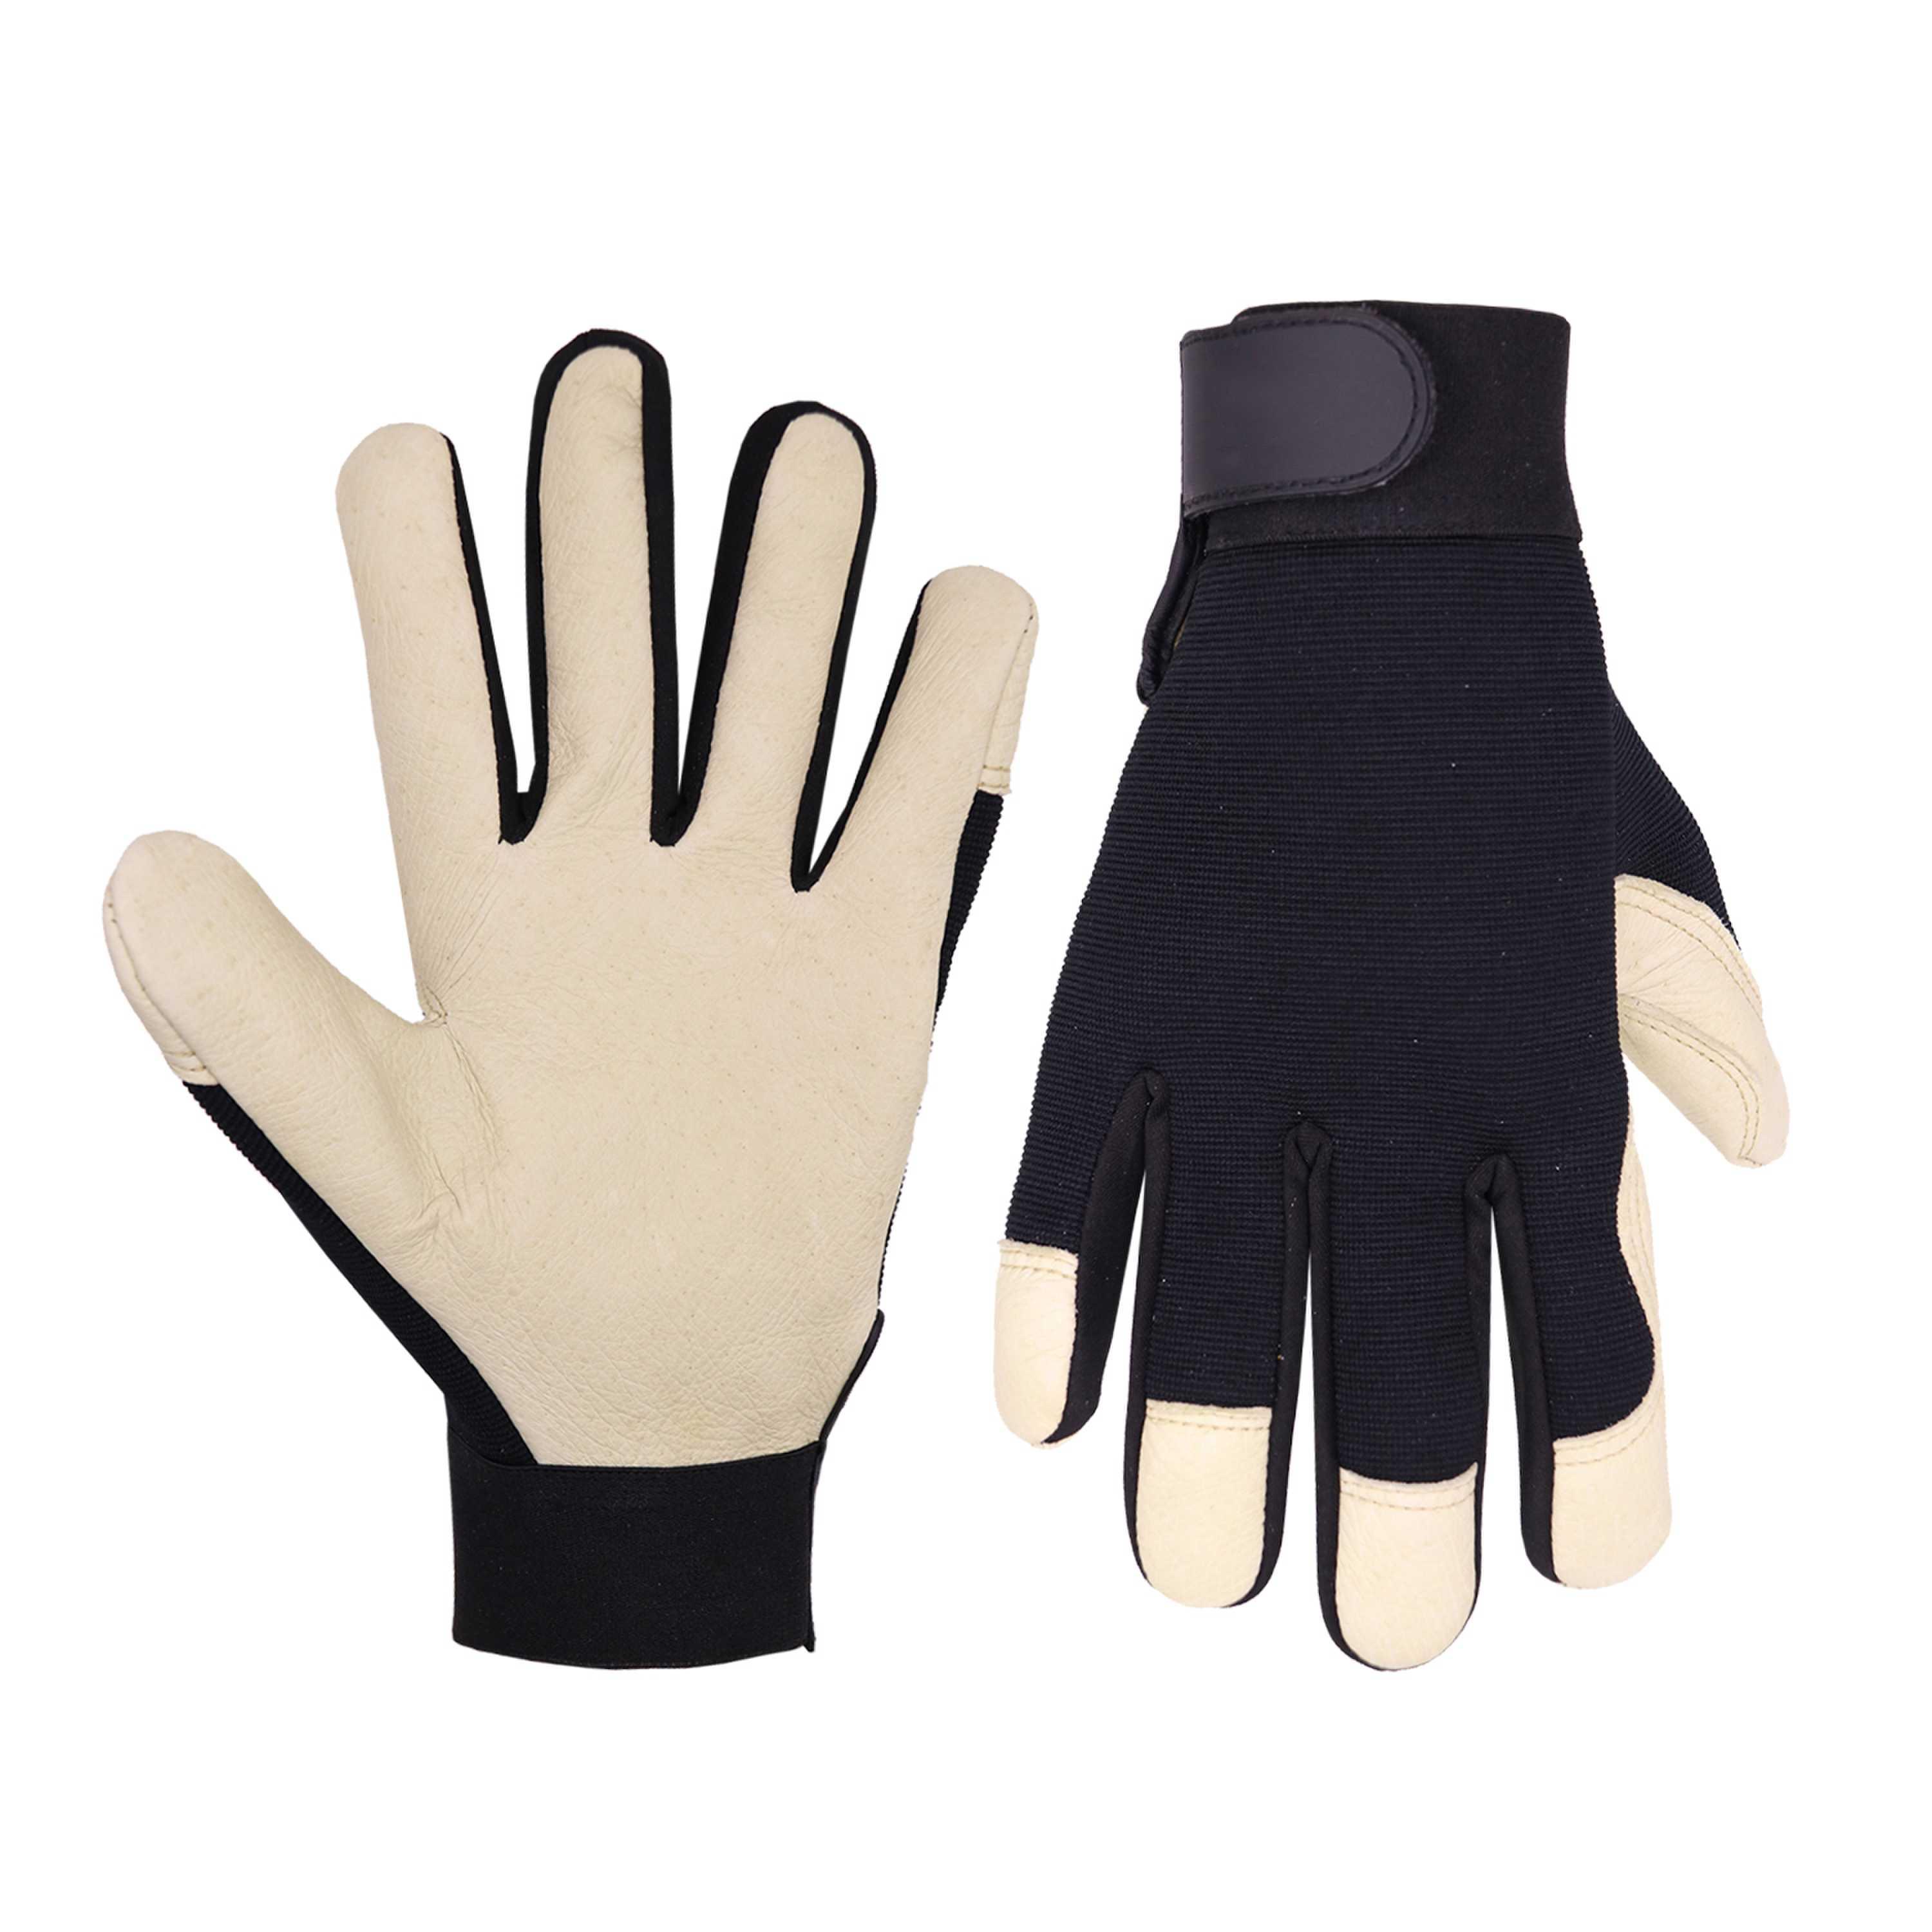 6109 PRISAFETY Premium Split Pigskin Leather Palm Protective Safety Performance Split Leather Gloves